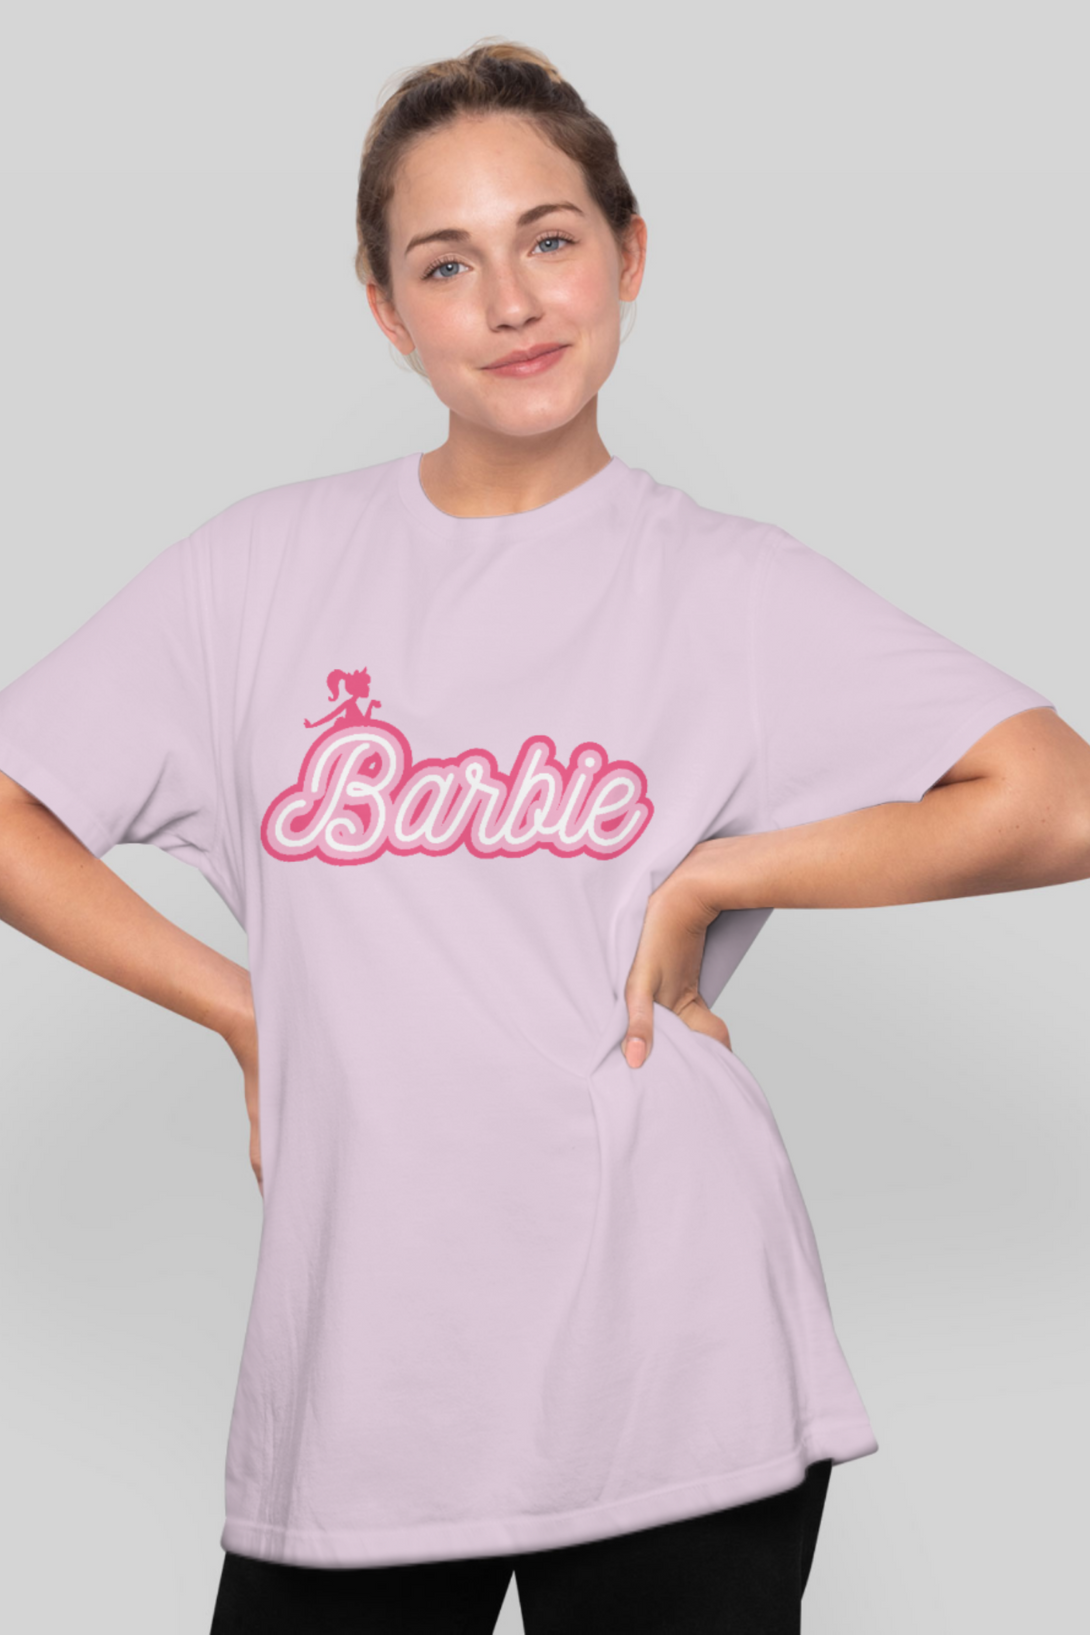 Barbie Printed Oversized T-Shirt For Women - WowWaves - 8